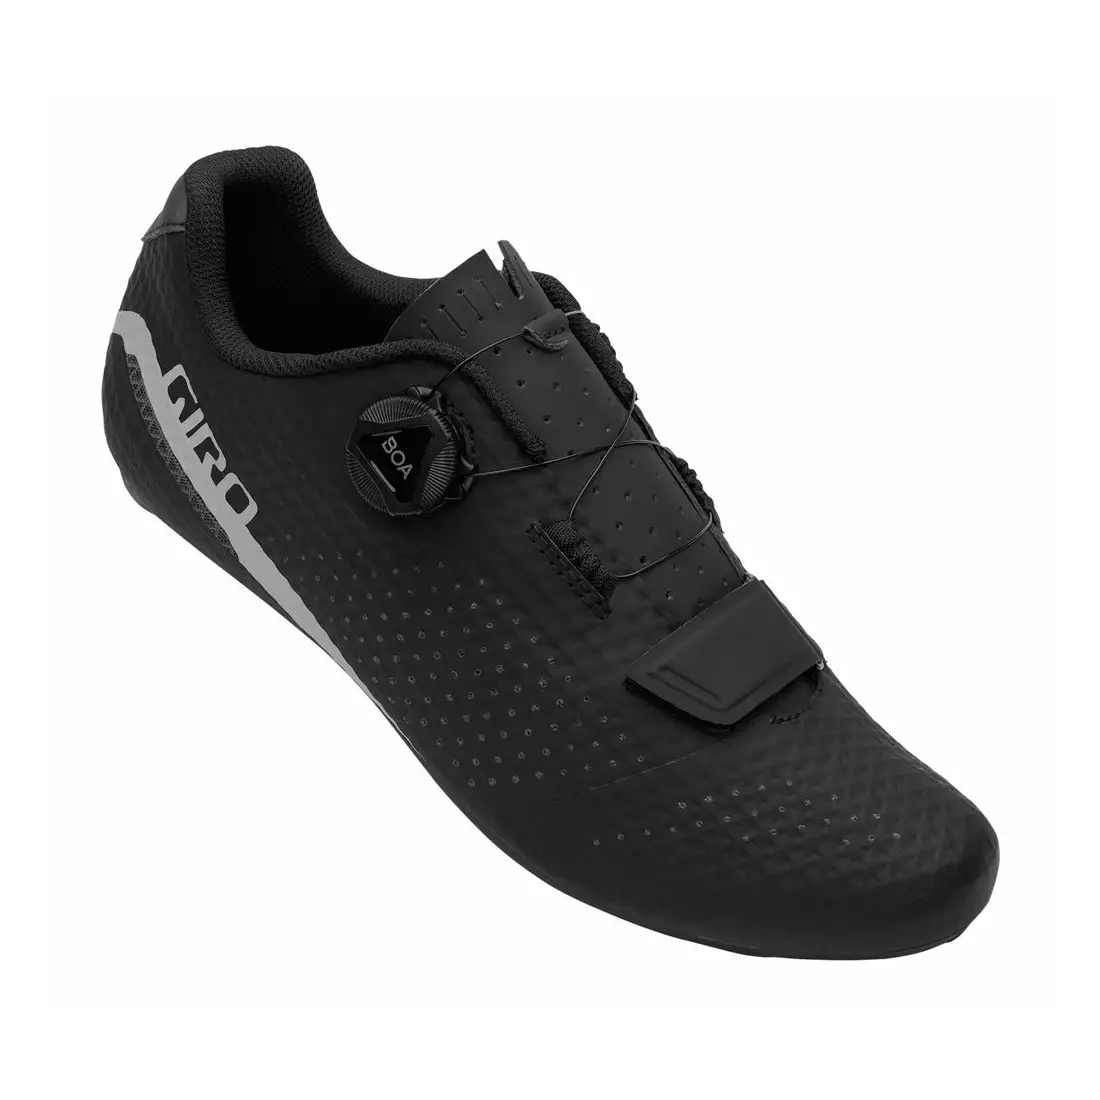 GIRO men's bicycle shoes CADET black GR-7123076